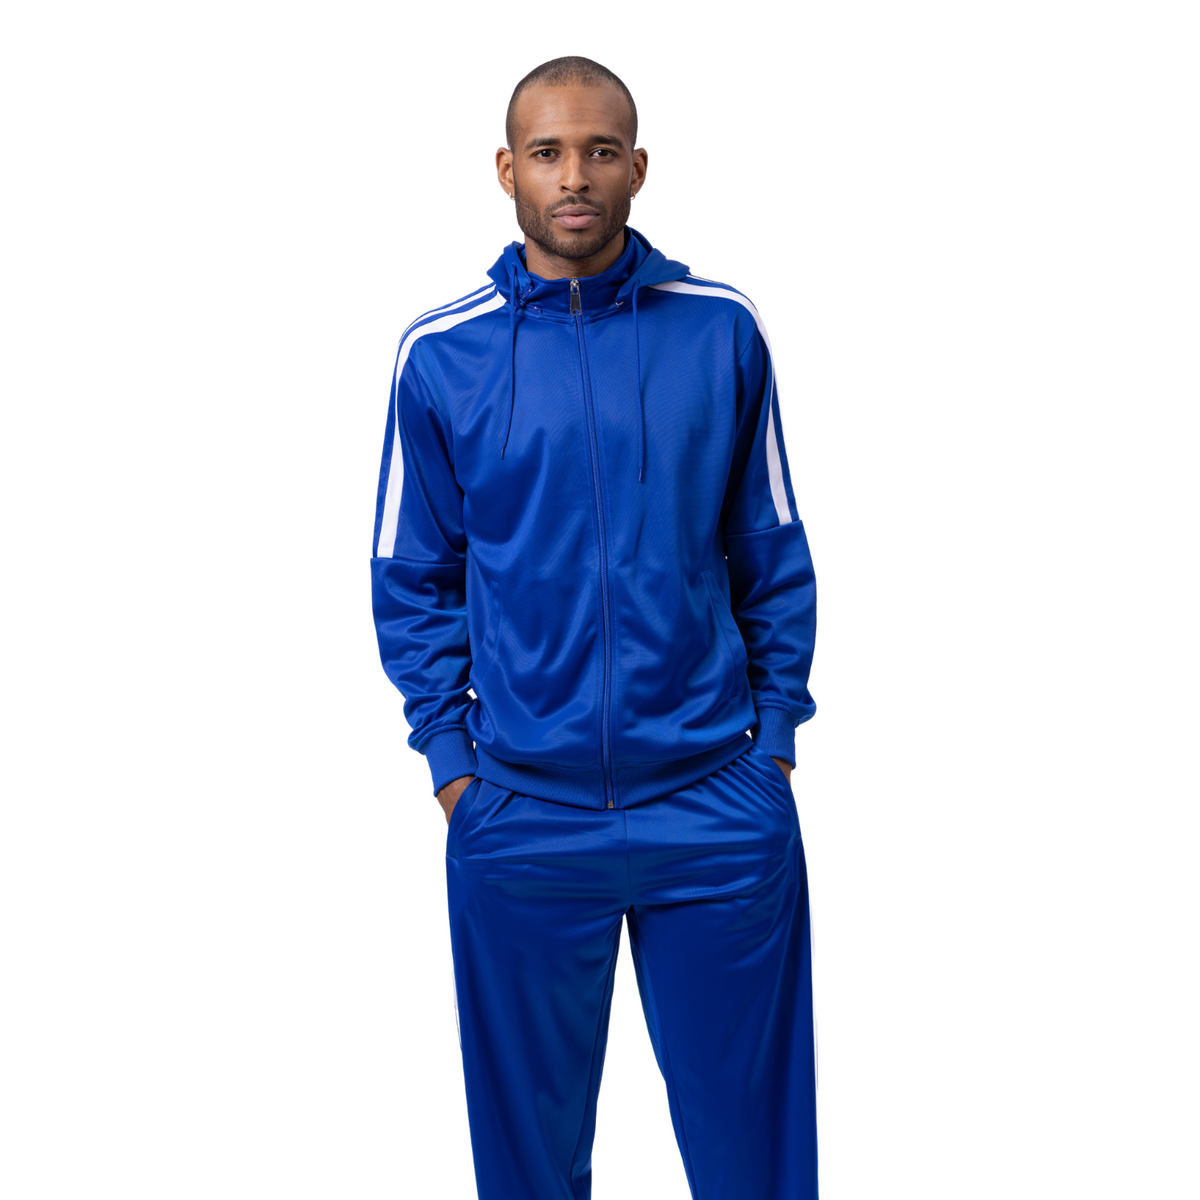 Men's Track Suit 2 Piece in Royal Blue